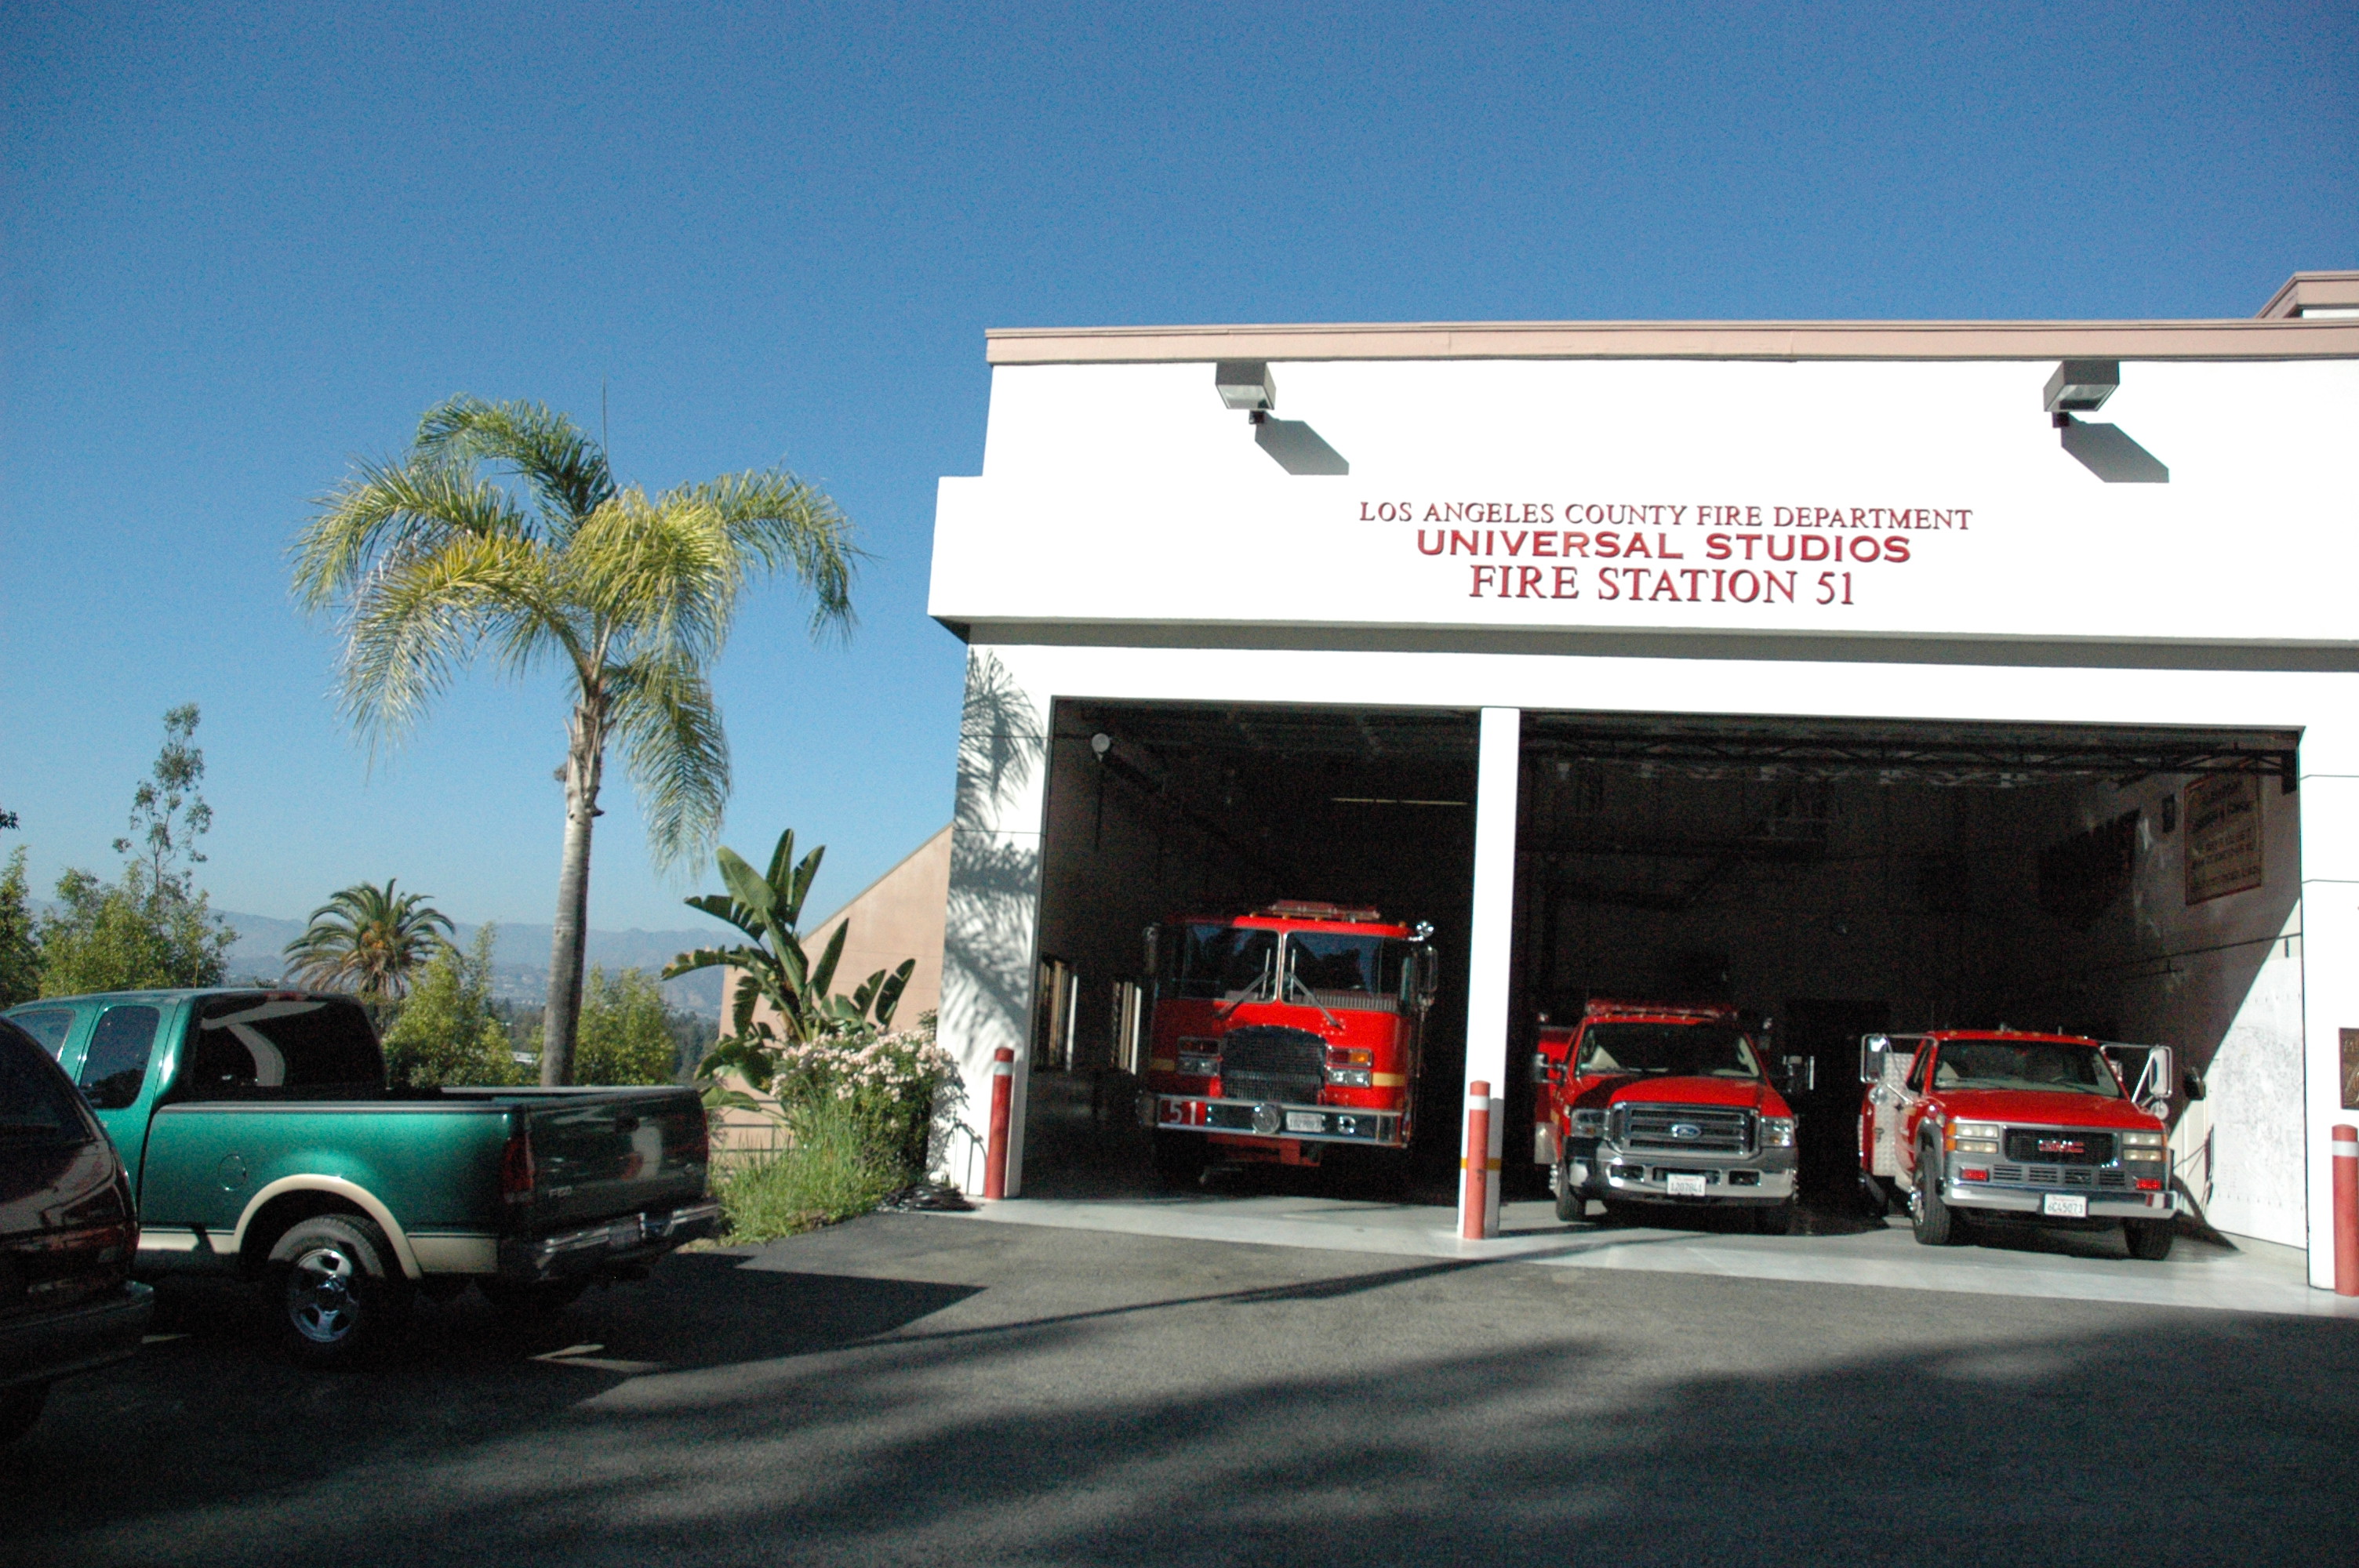 Universal Studios Fire Station 51